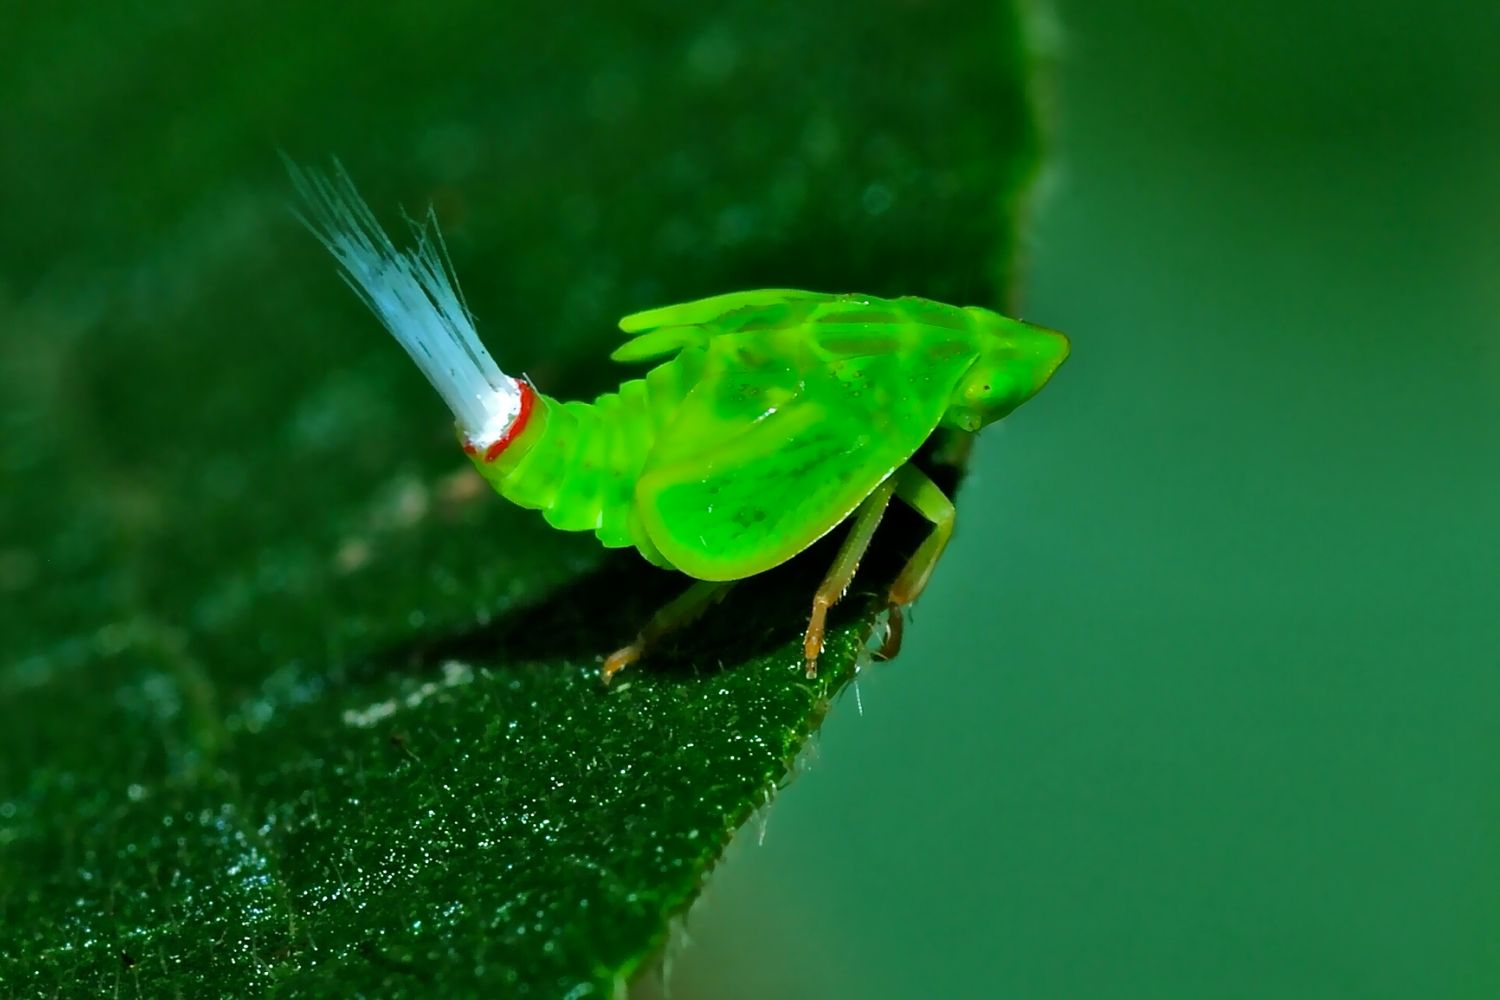 5. Leafhopper Nymph